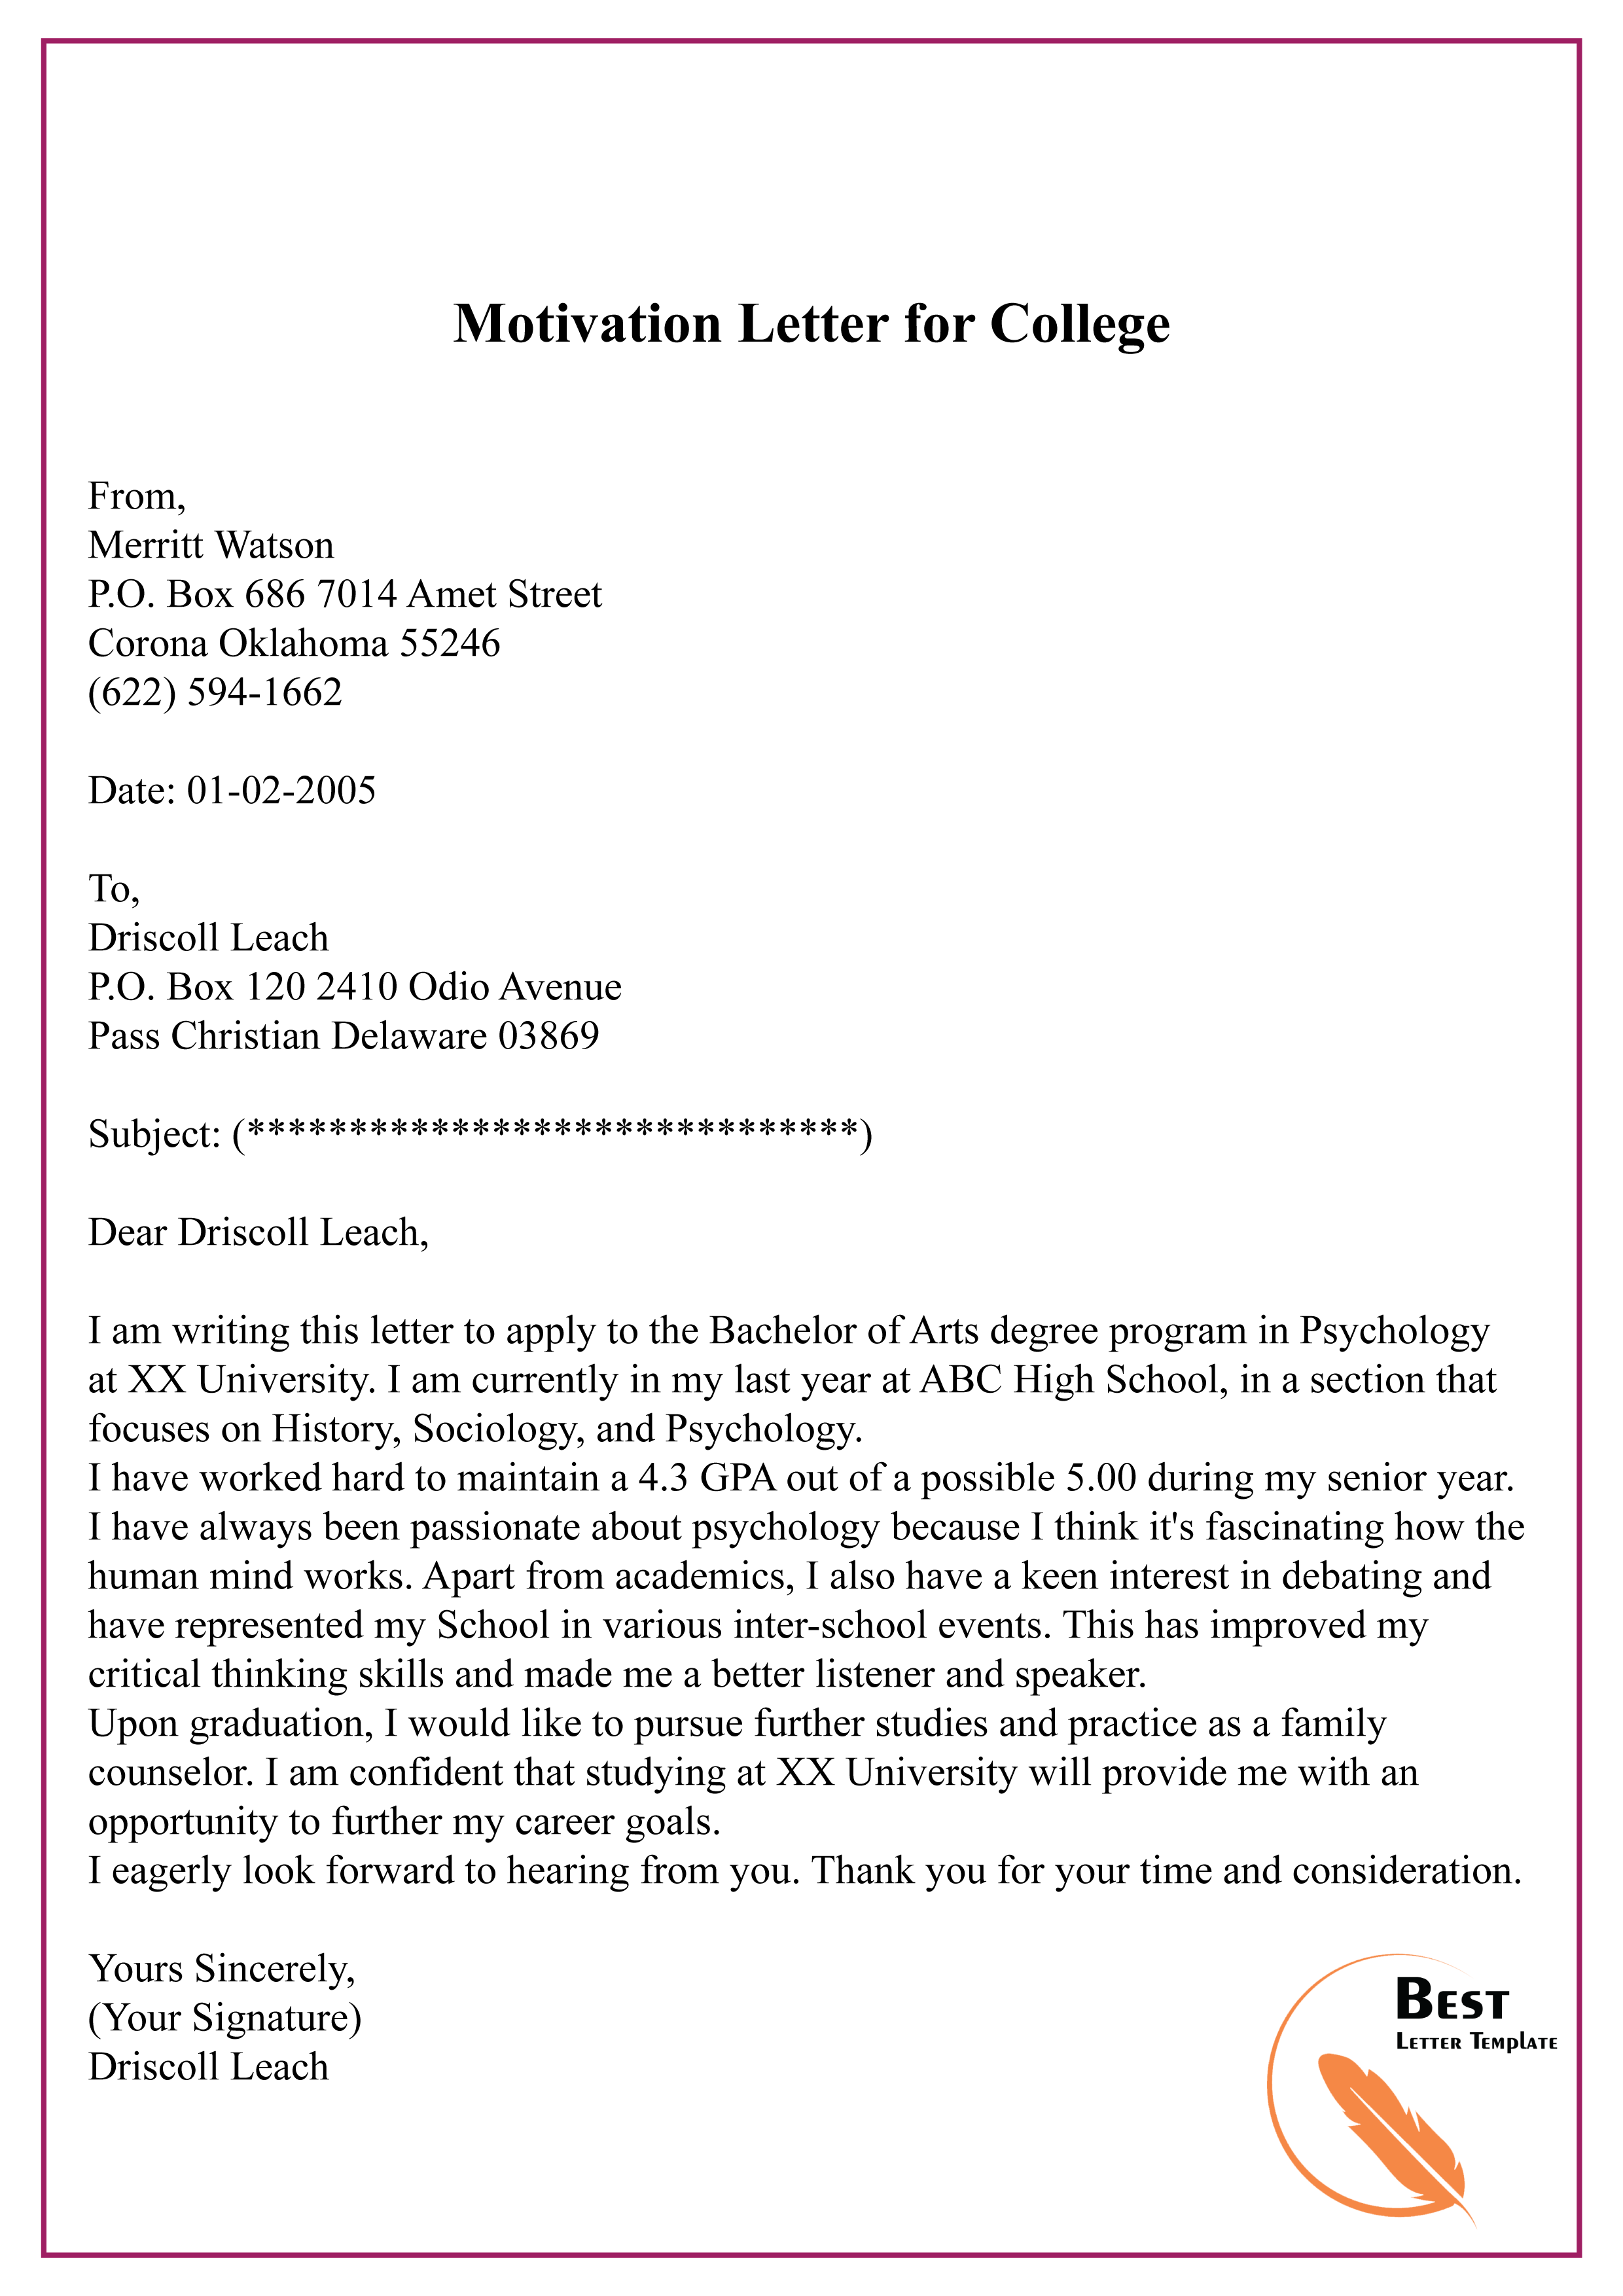 motivation-letter-for-college-01-best-letter-template